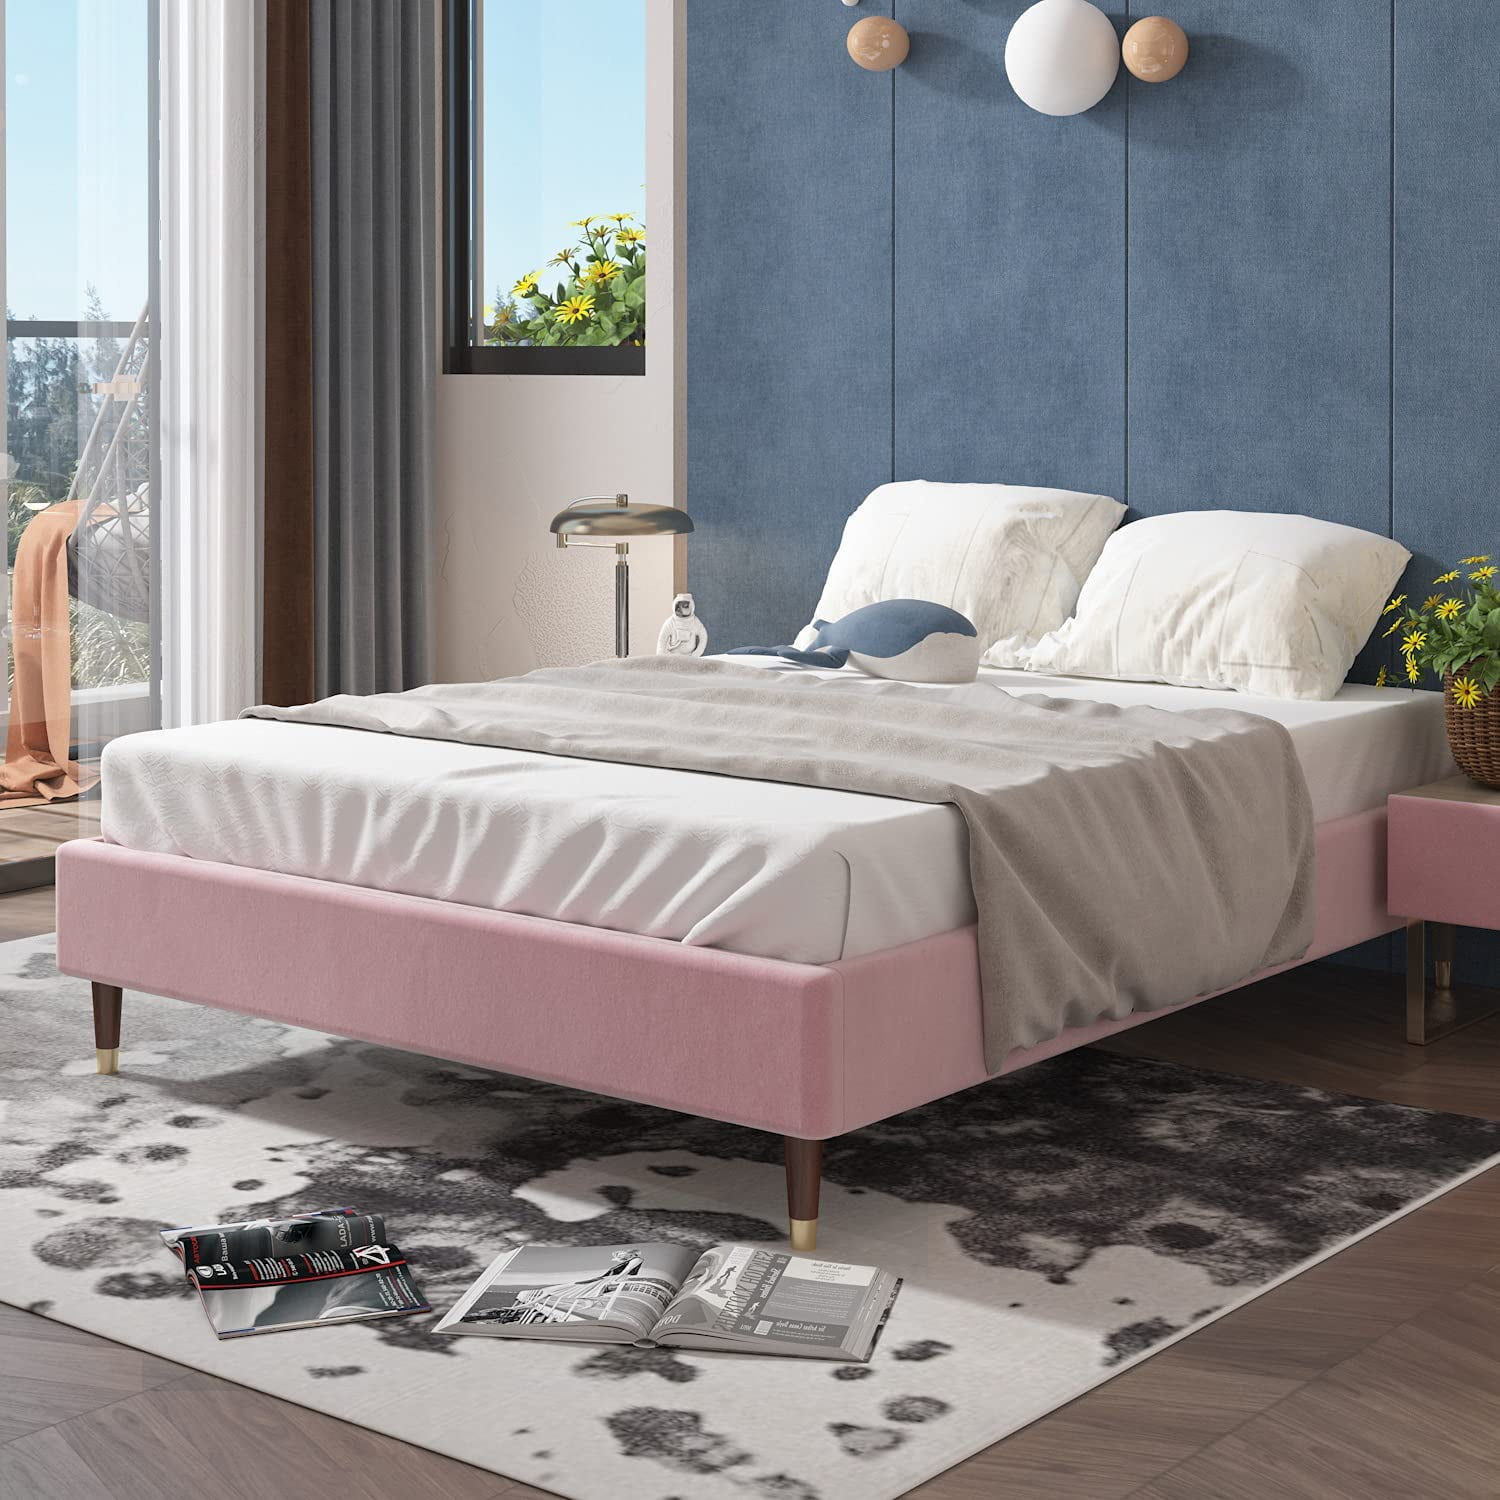 Nextfur Queen Size Pink Velvet, Light Wood Queen Platform Bed Frame